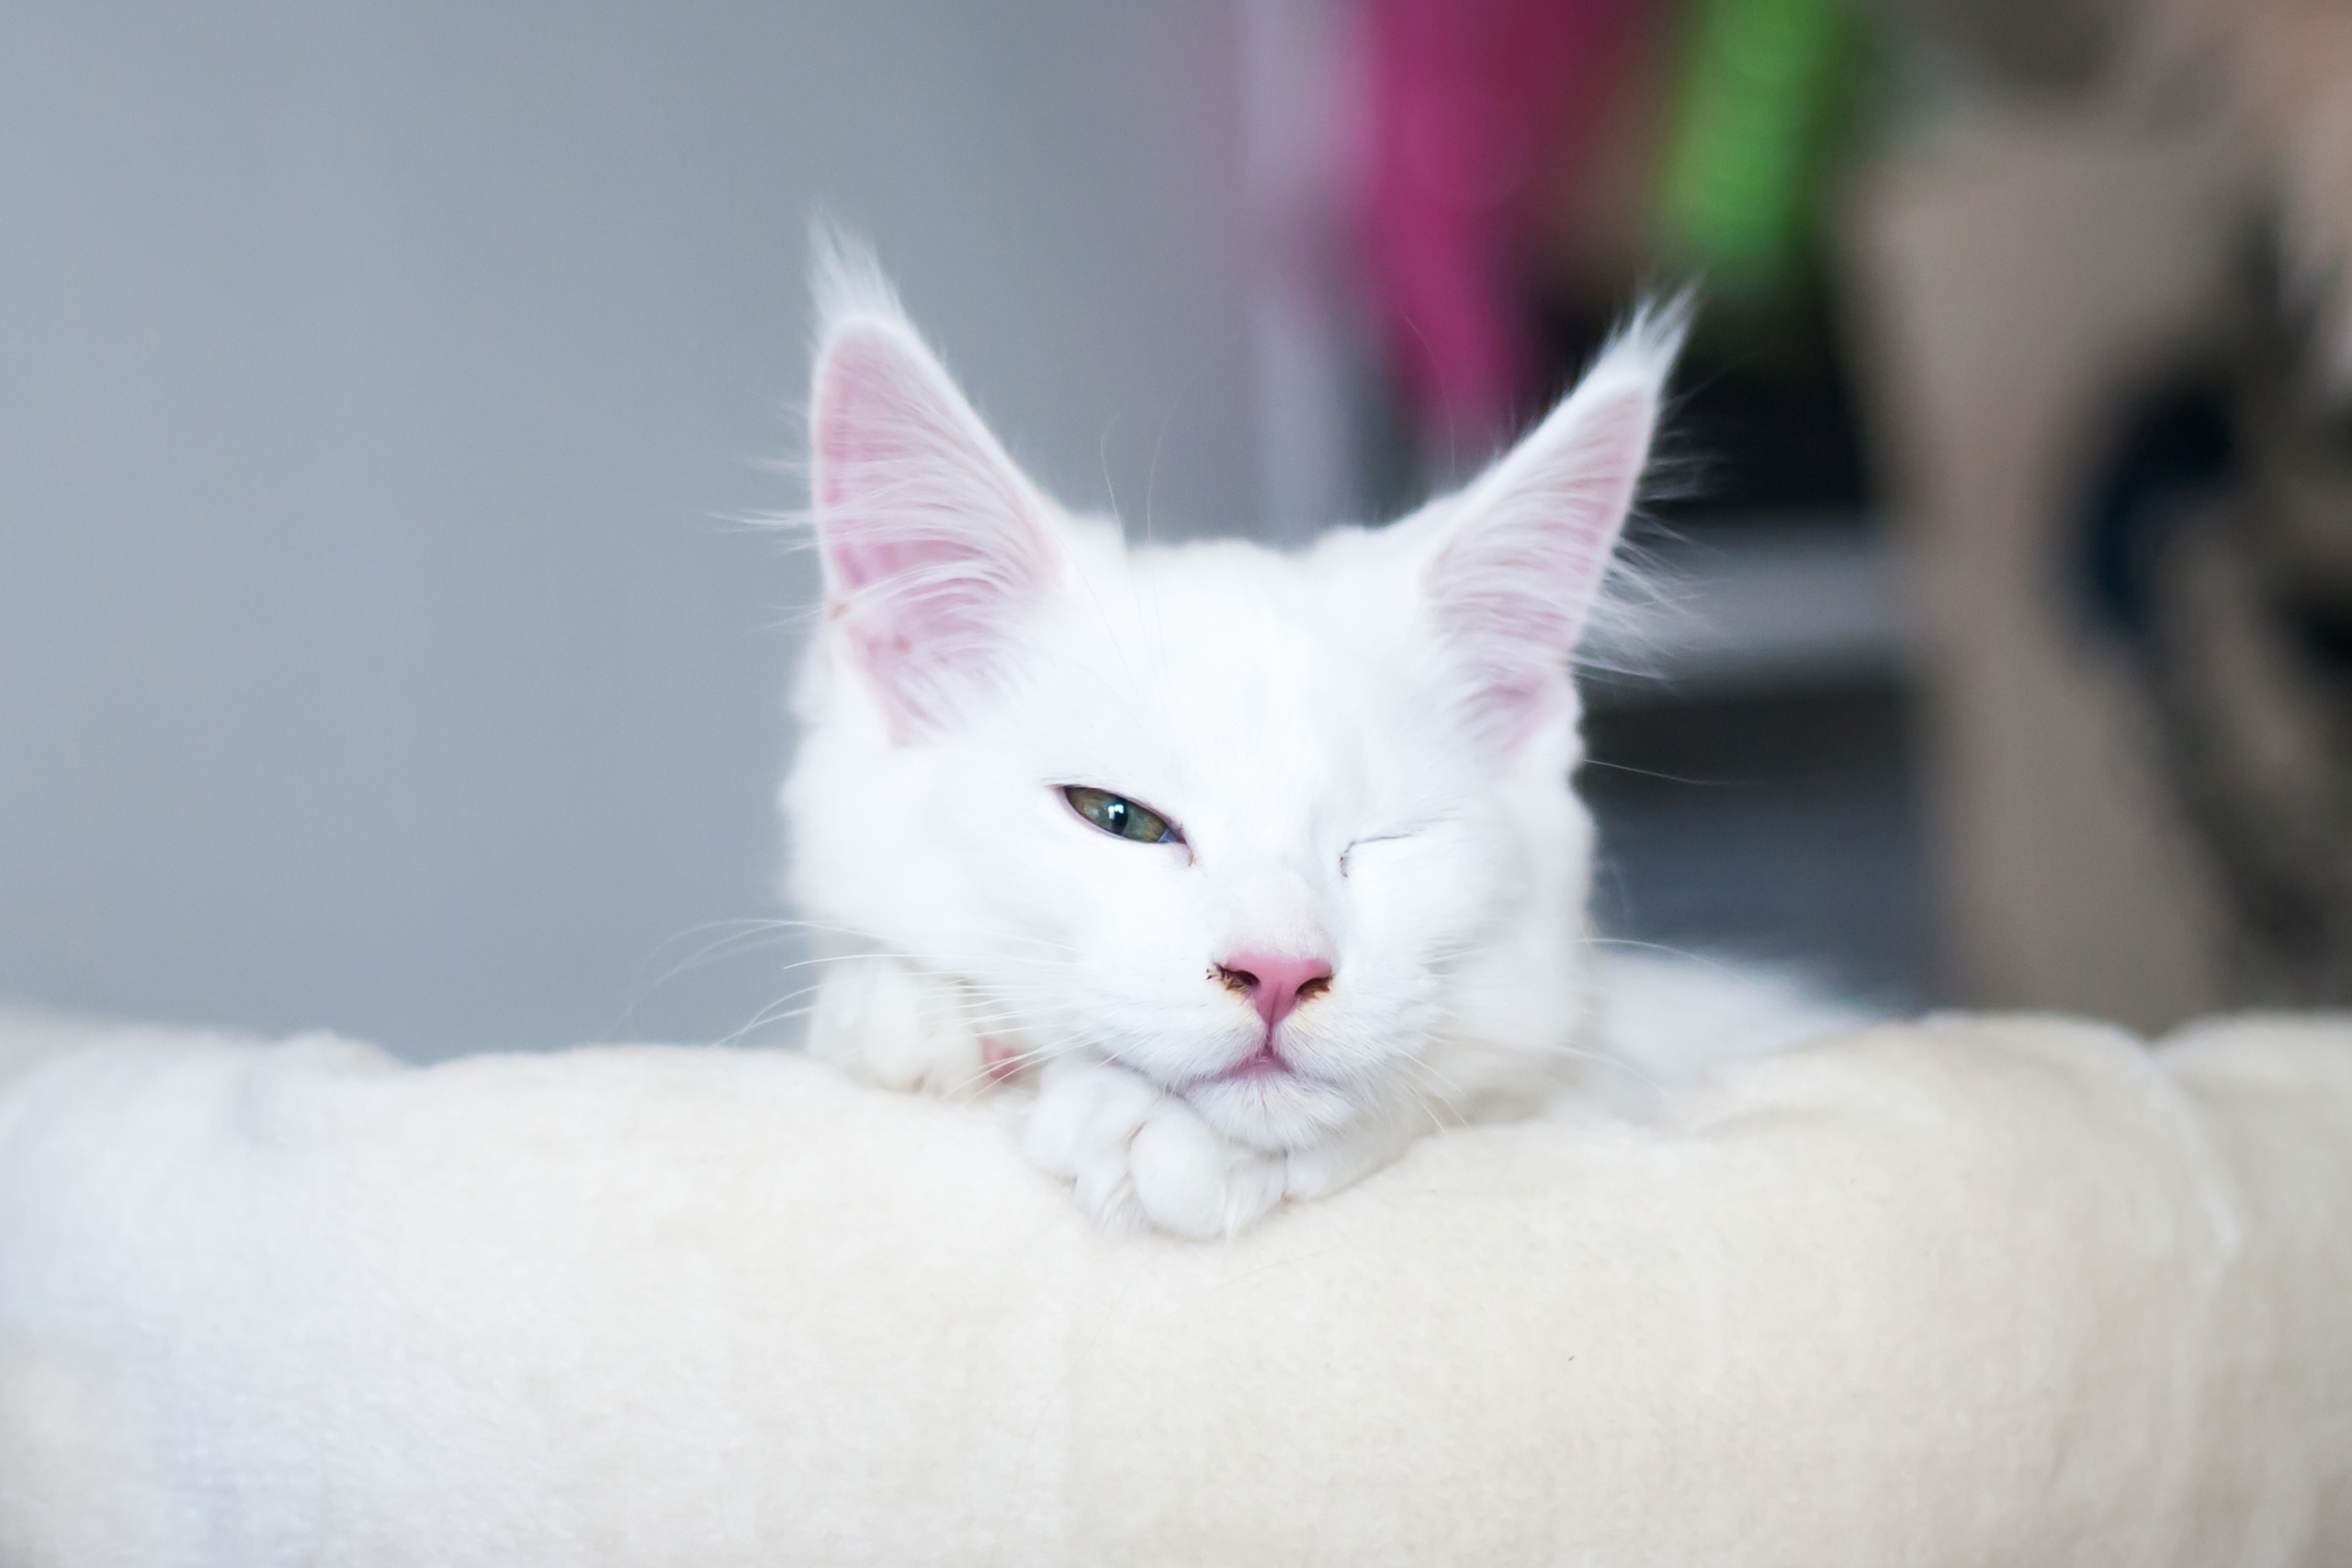 Why Do Cat Sleep With Their Eyes Open? It's Creepy | PawTracks